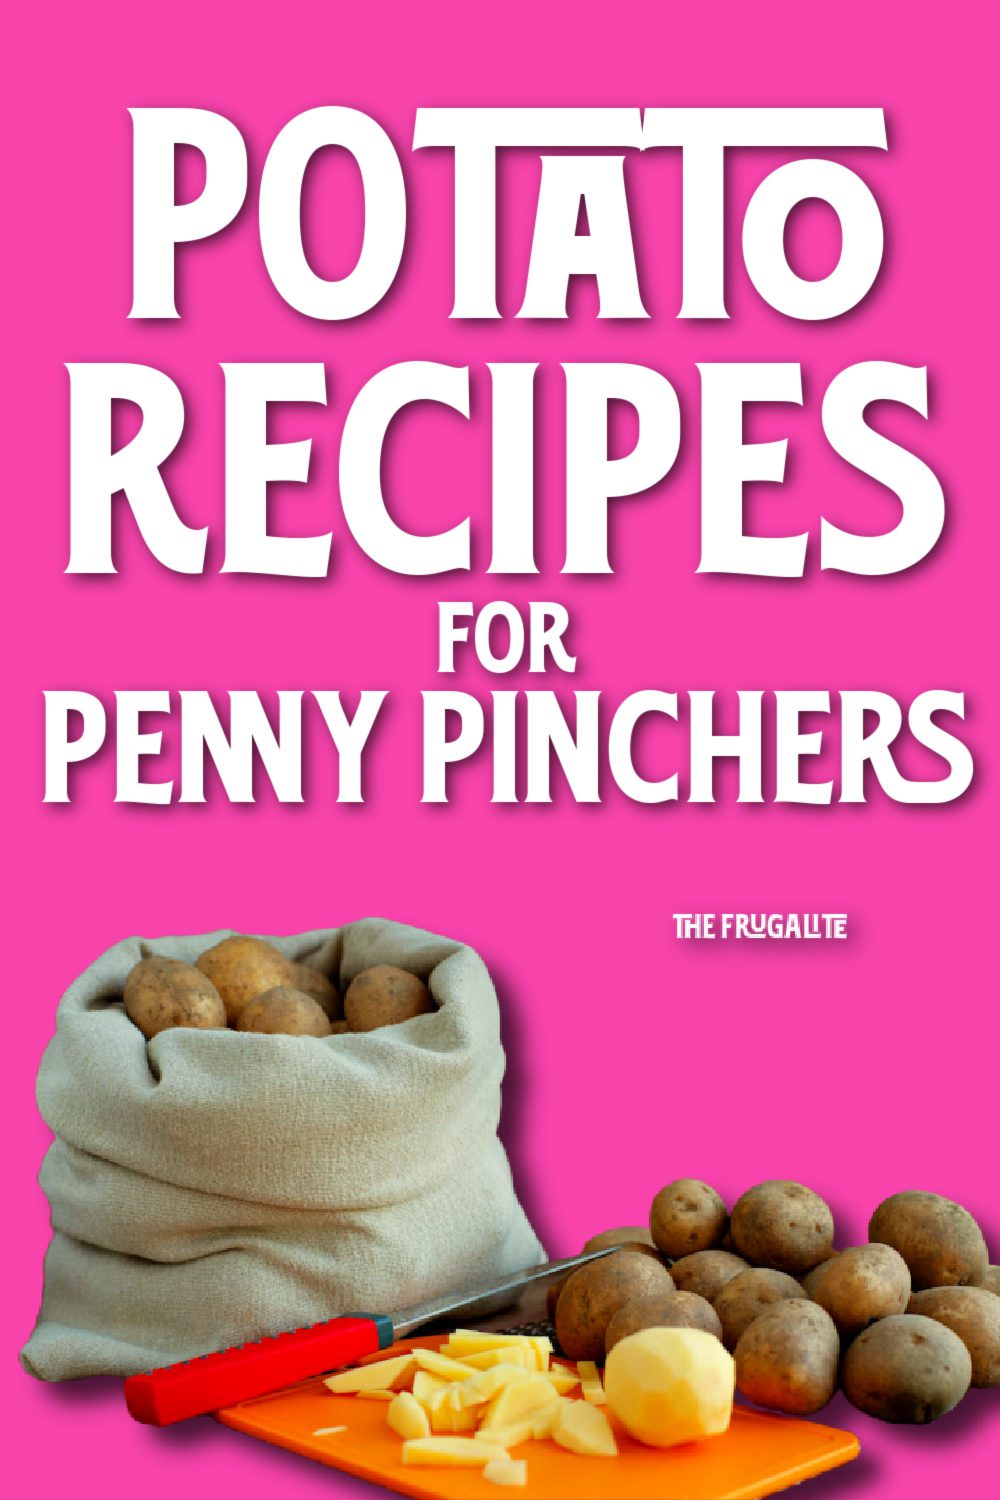 Potato Recipes for Penny Pinchers